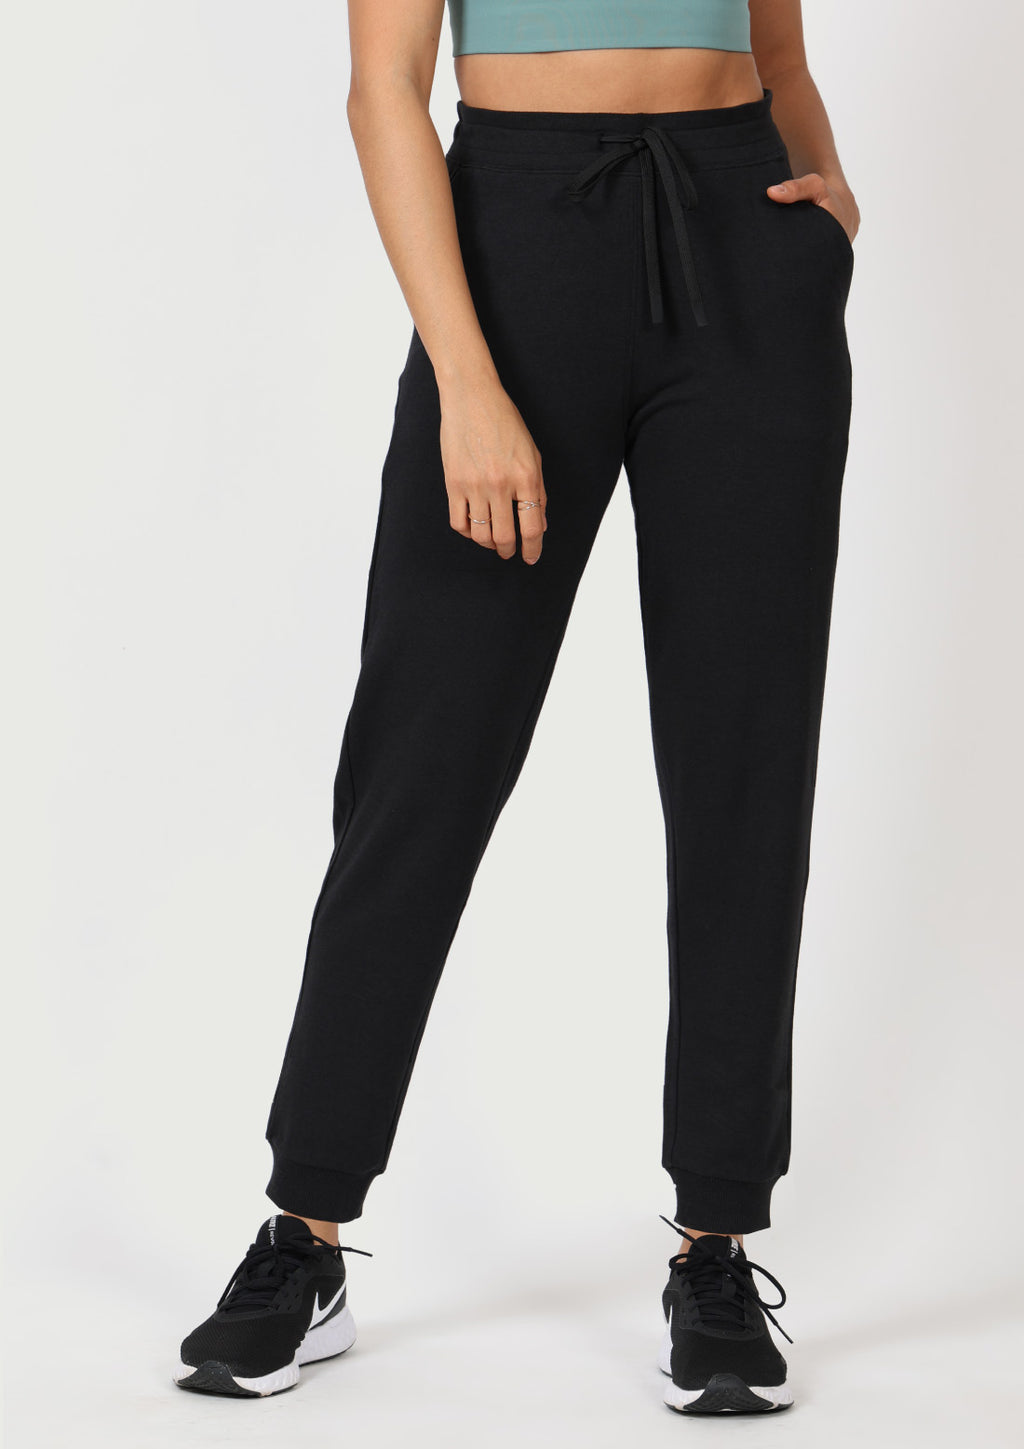 Buy Bliss Black Tall Track Pants for Women by BLISSCLUB Online